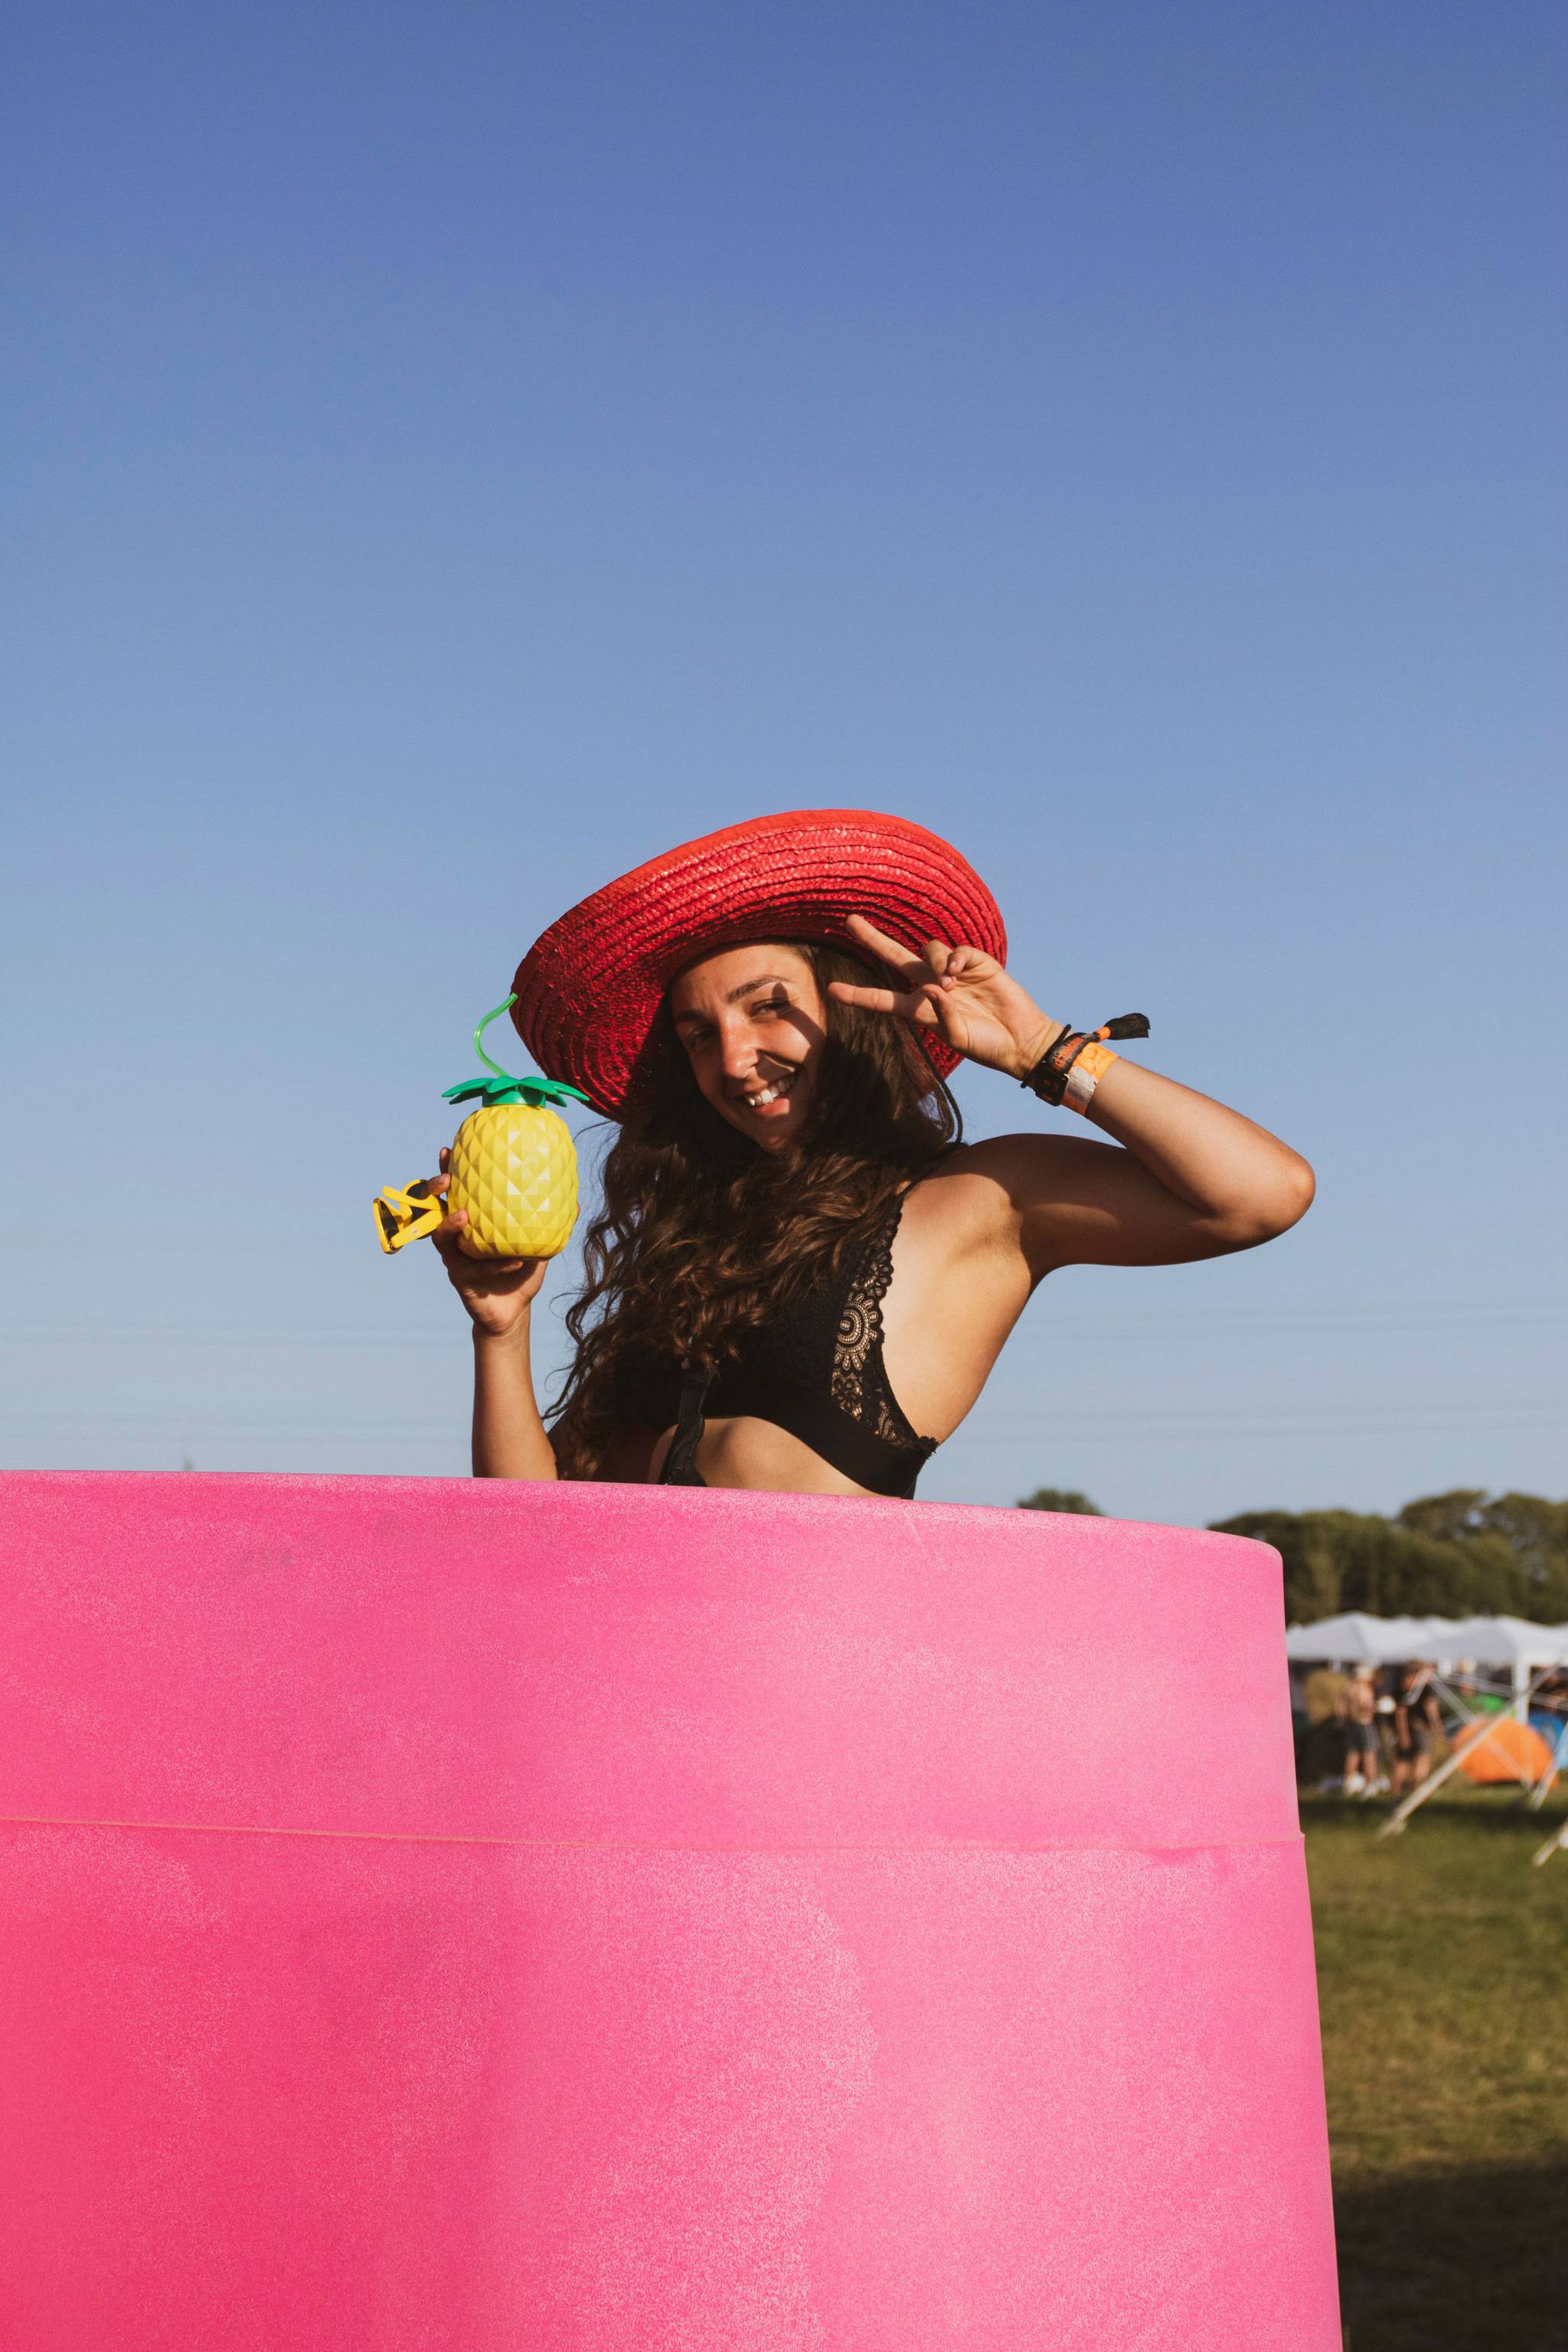 Lapee promotes gender equality at festivals